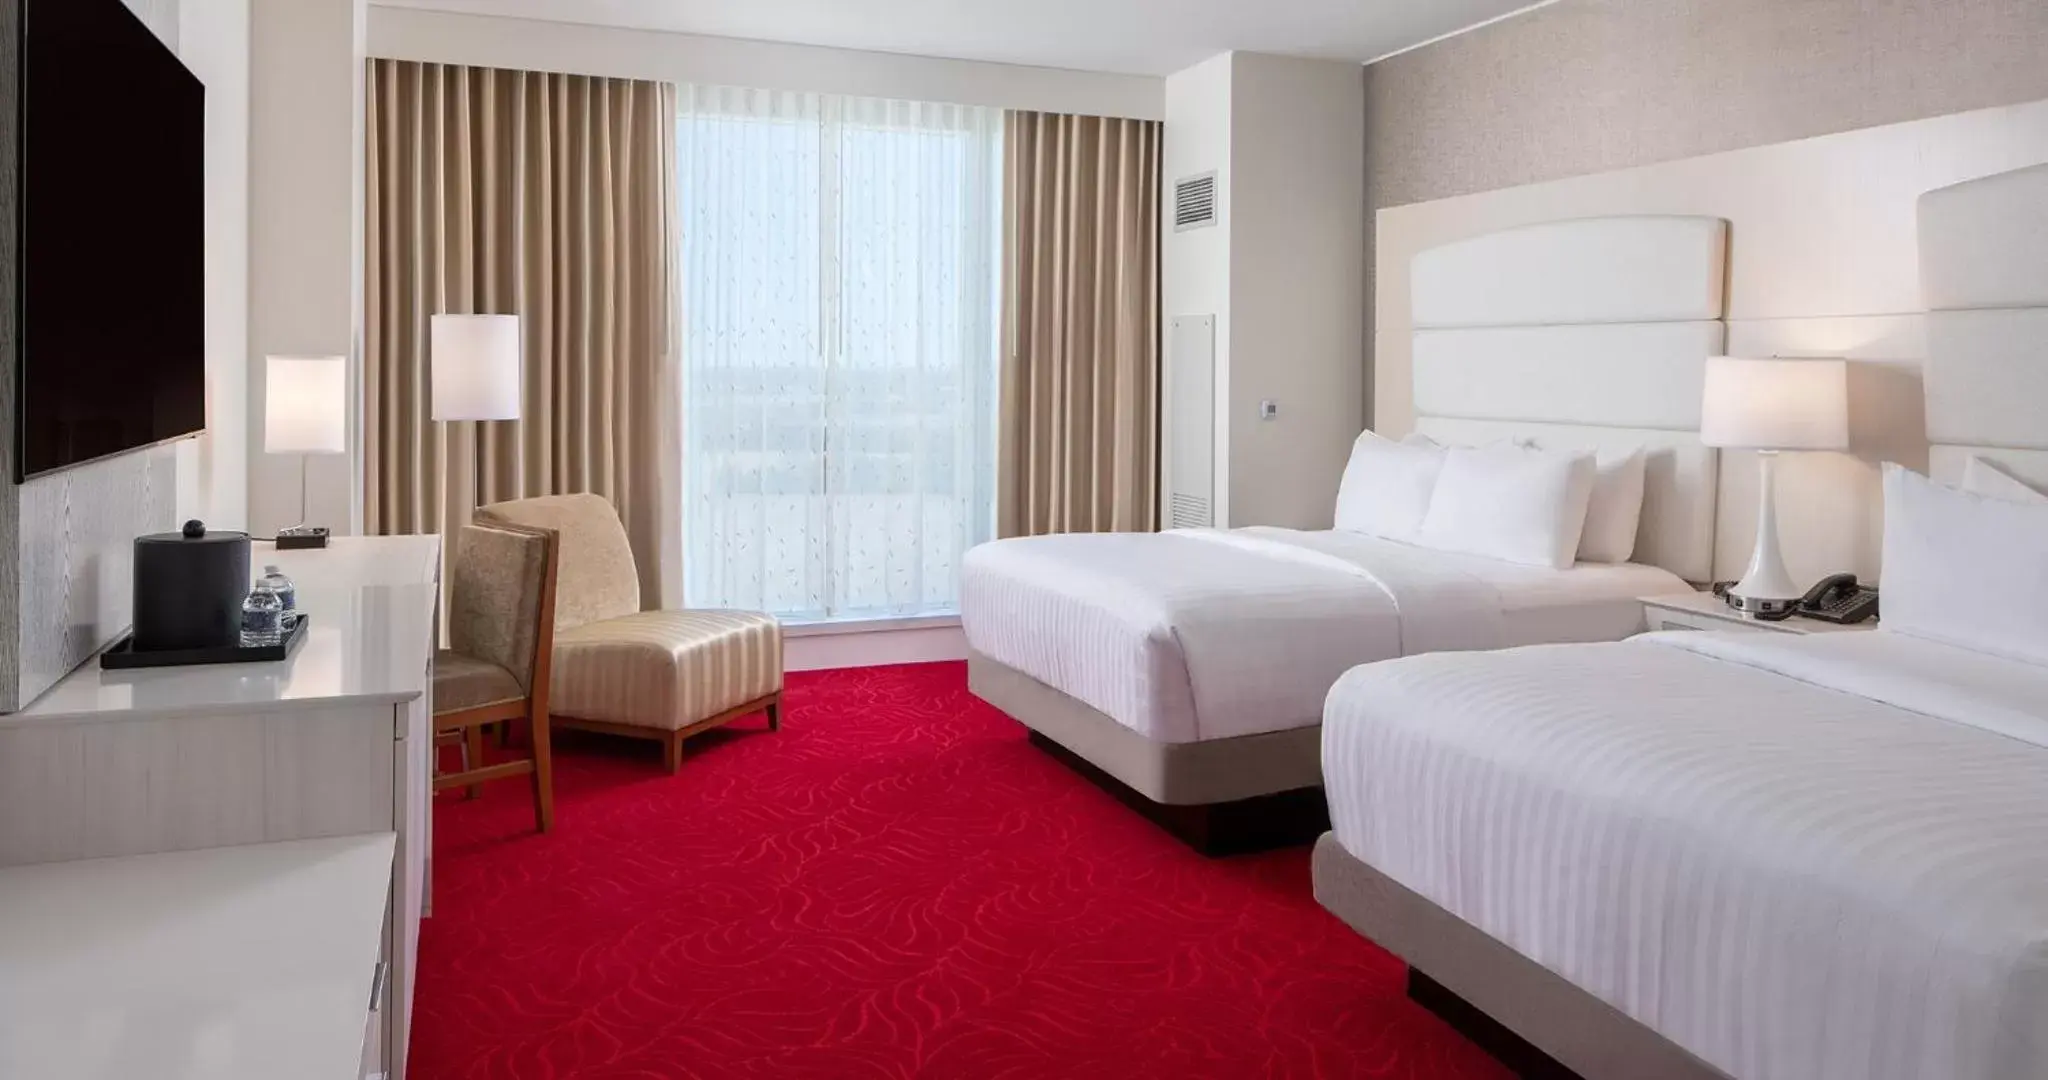 Deluxe Queen Room with Two Queen Beds in Southland Casino Hotel